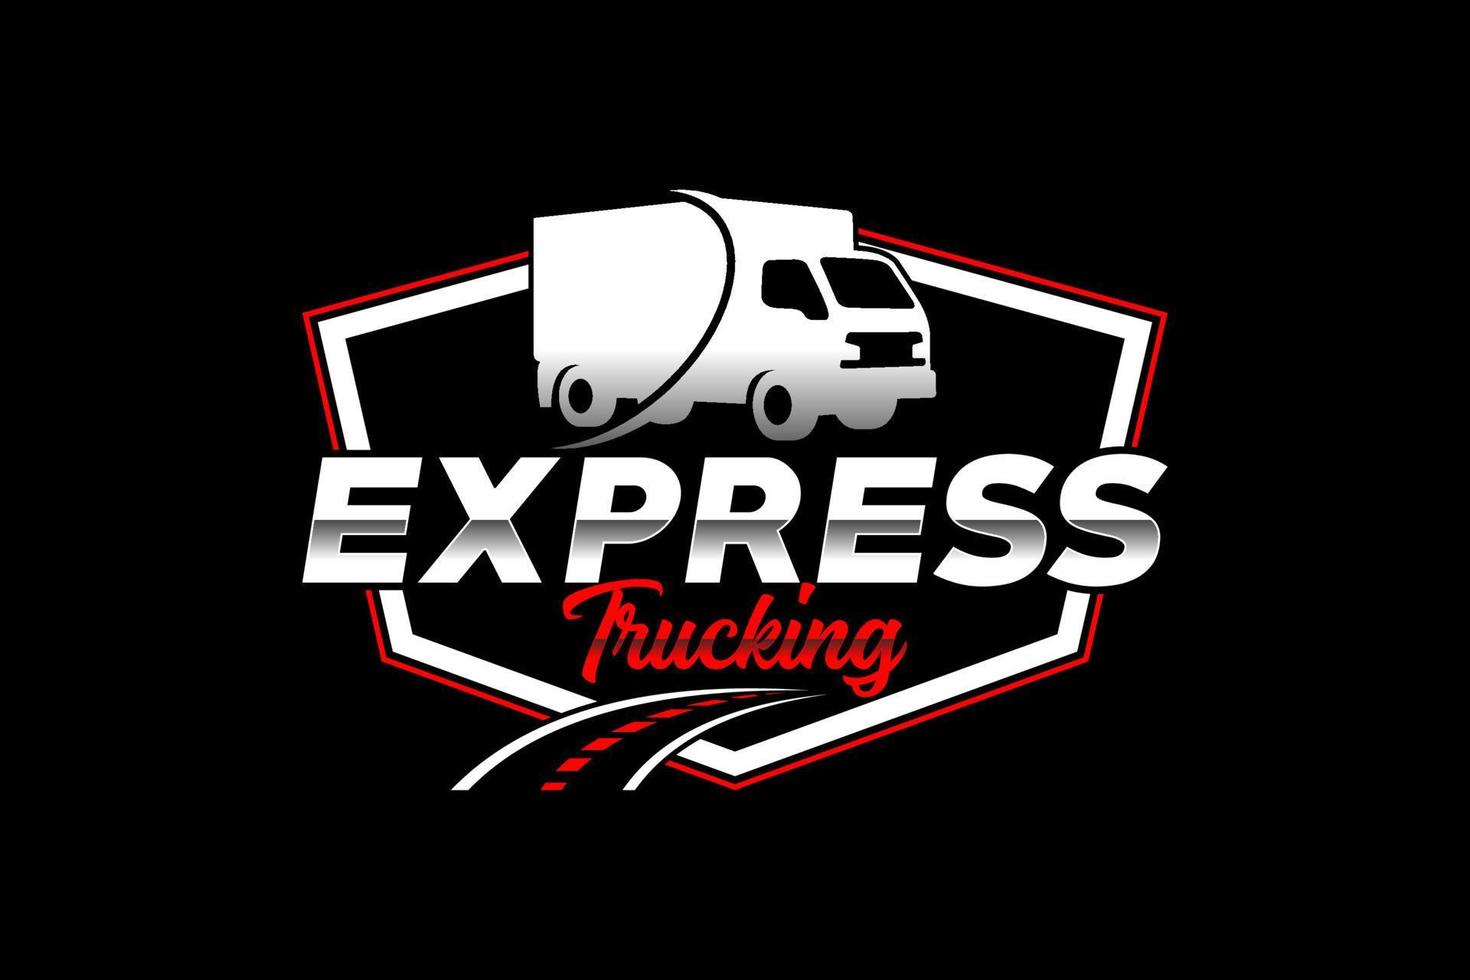 vector de plantilla de logotipo abstracto de silueta de camión. adecuado para logotipo de carga, camiones de carga de entrega, logotipo de logística